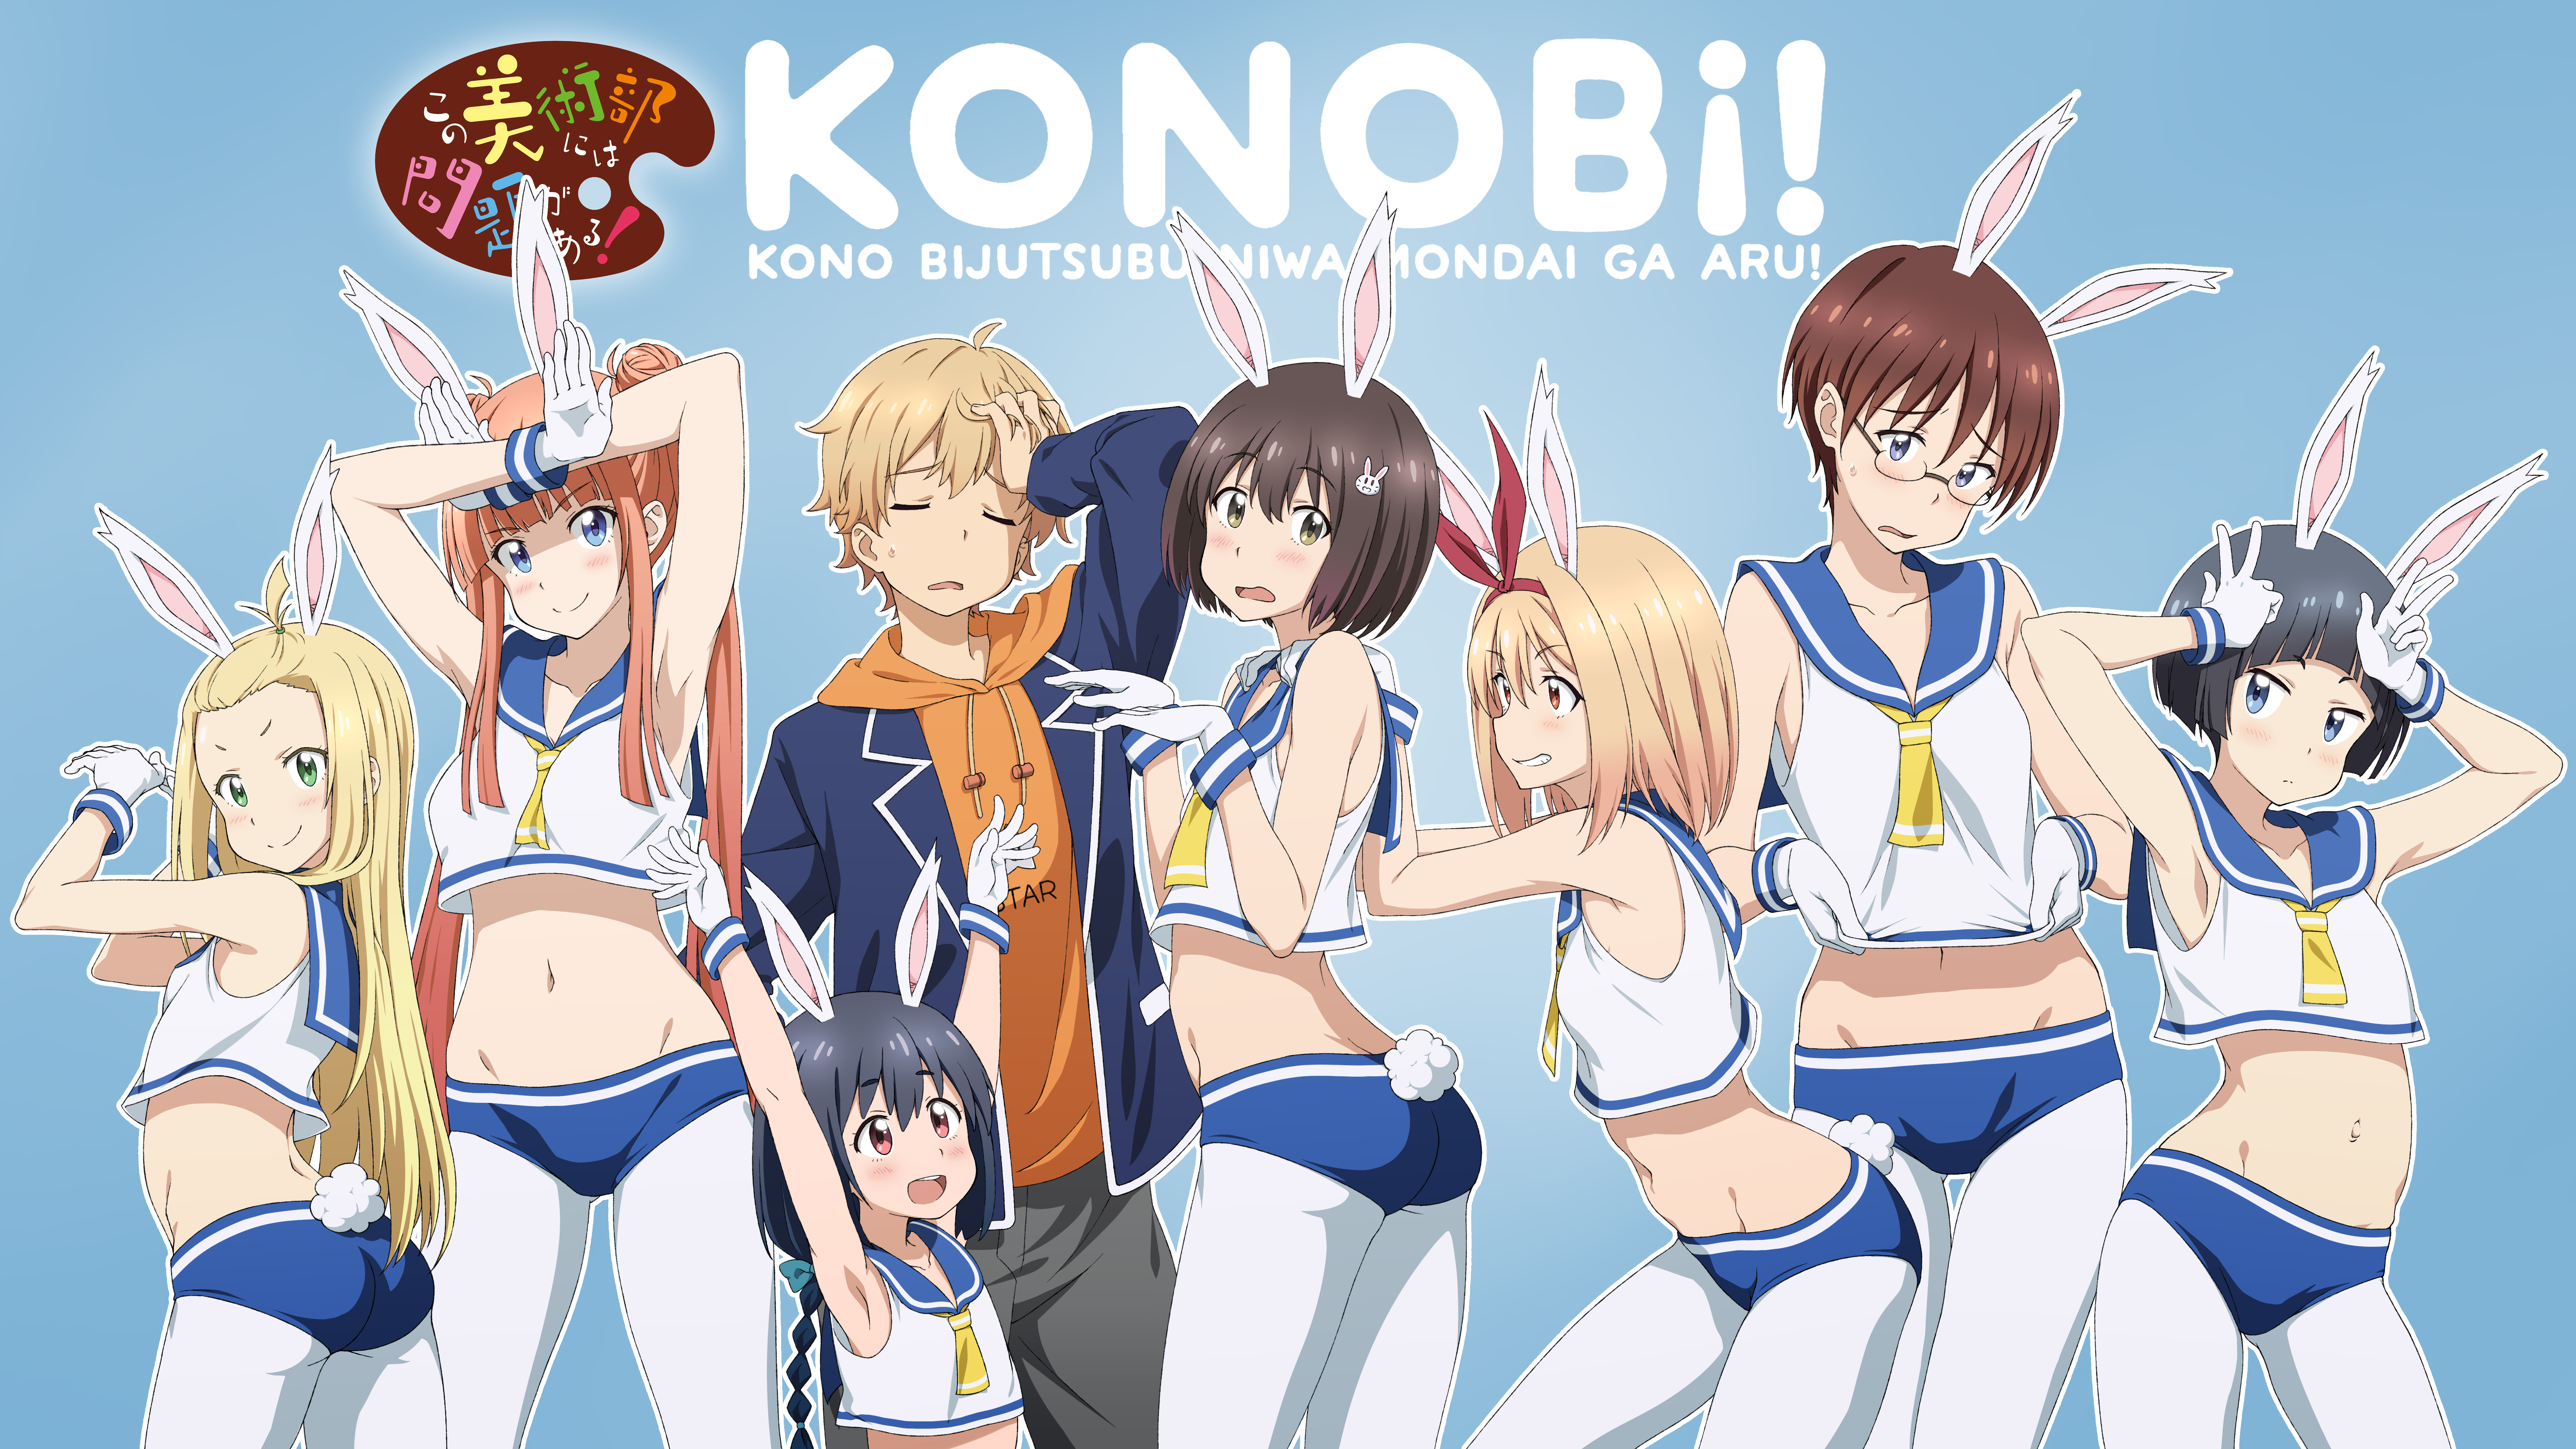 Anime 6692x3764 Kono Bijutsubu ni wa Mondai ga Aru! bunny ears animal ears sailor uniform pantyhose bloomers anime anime boys anime girls belly button